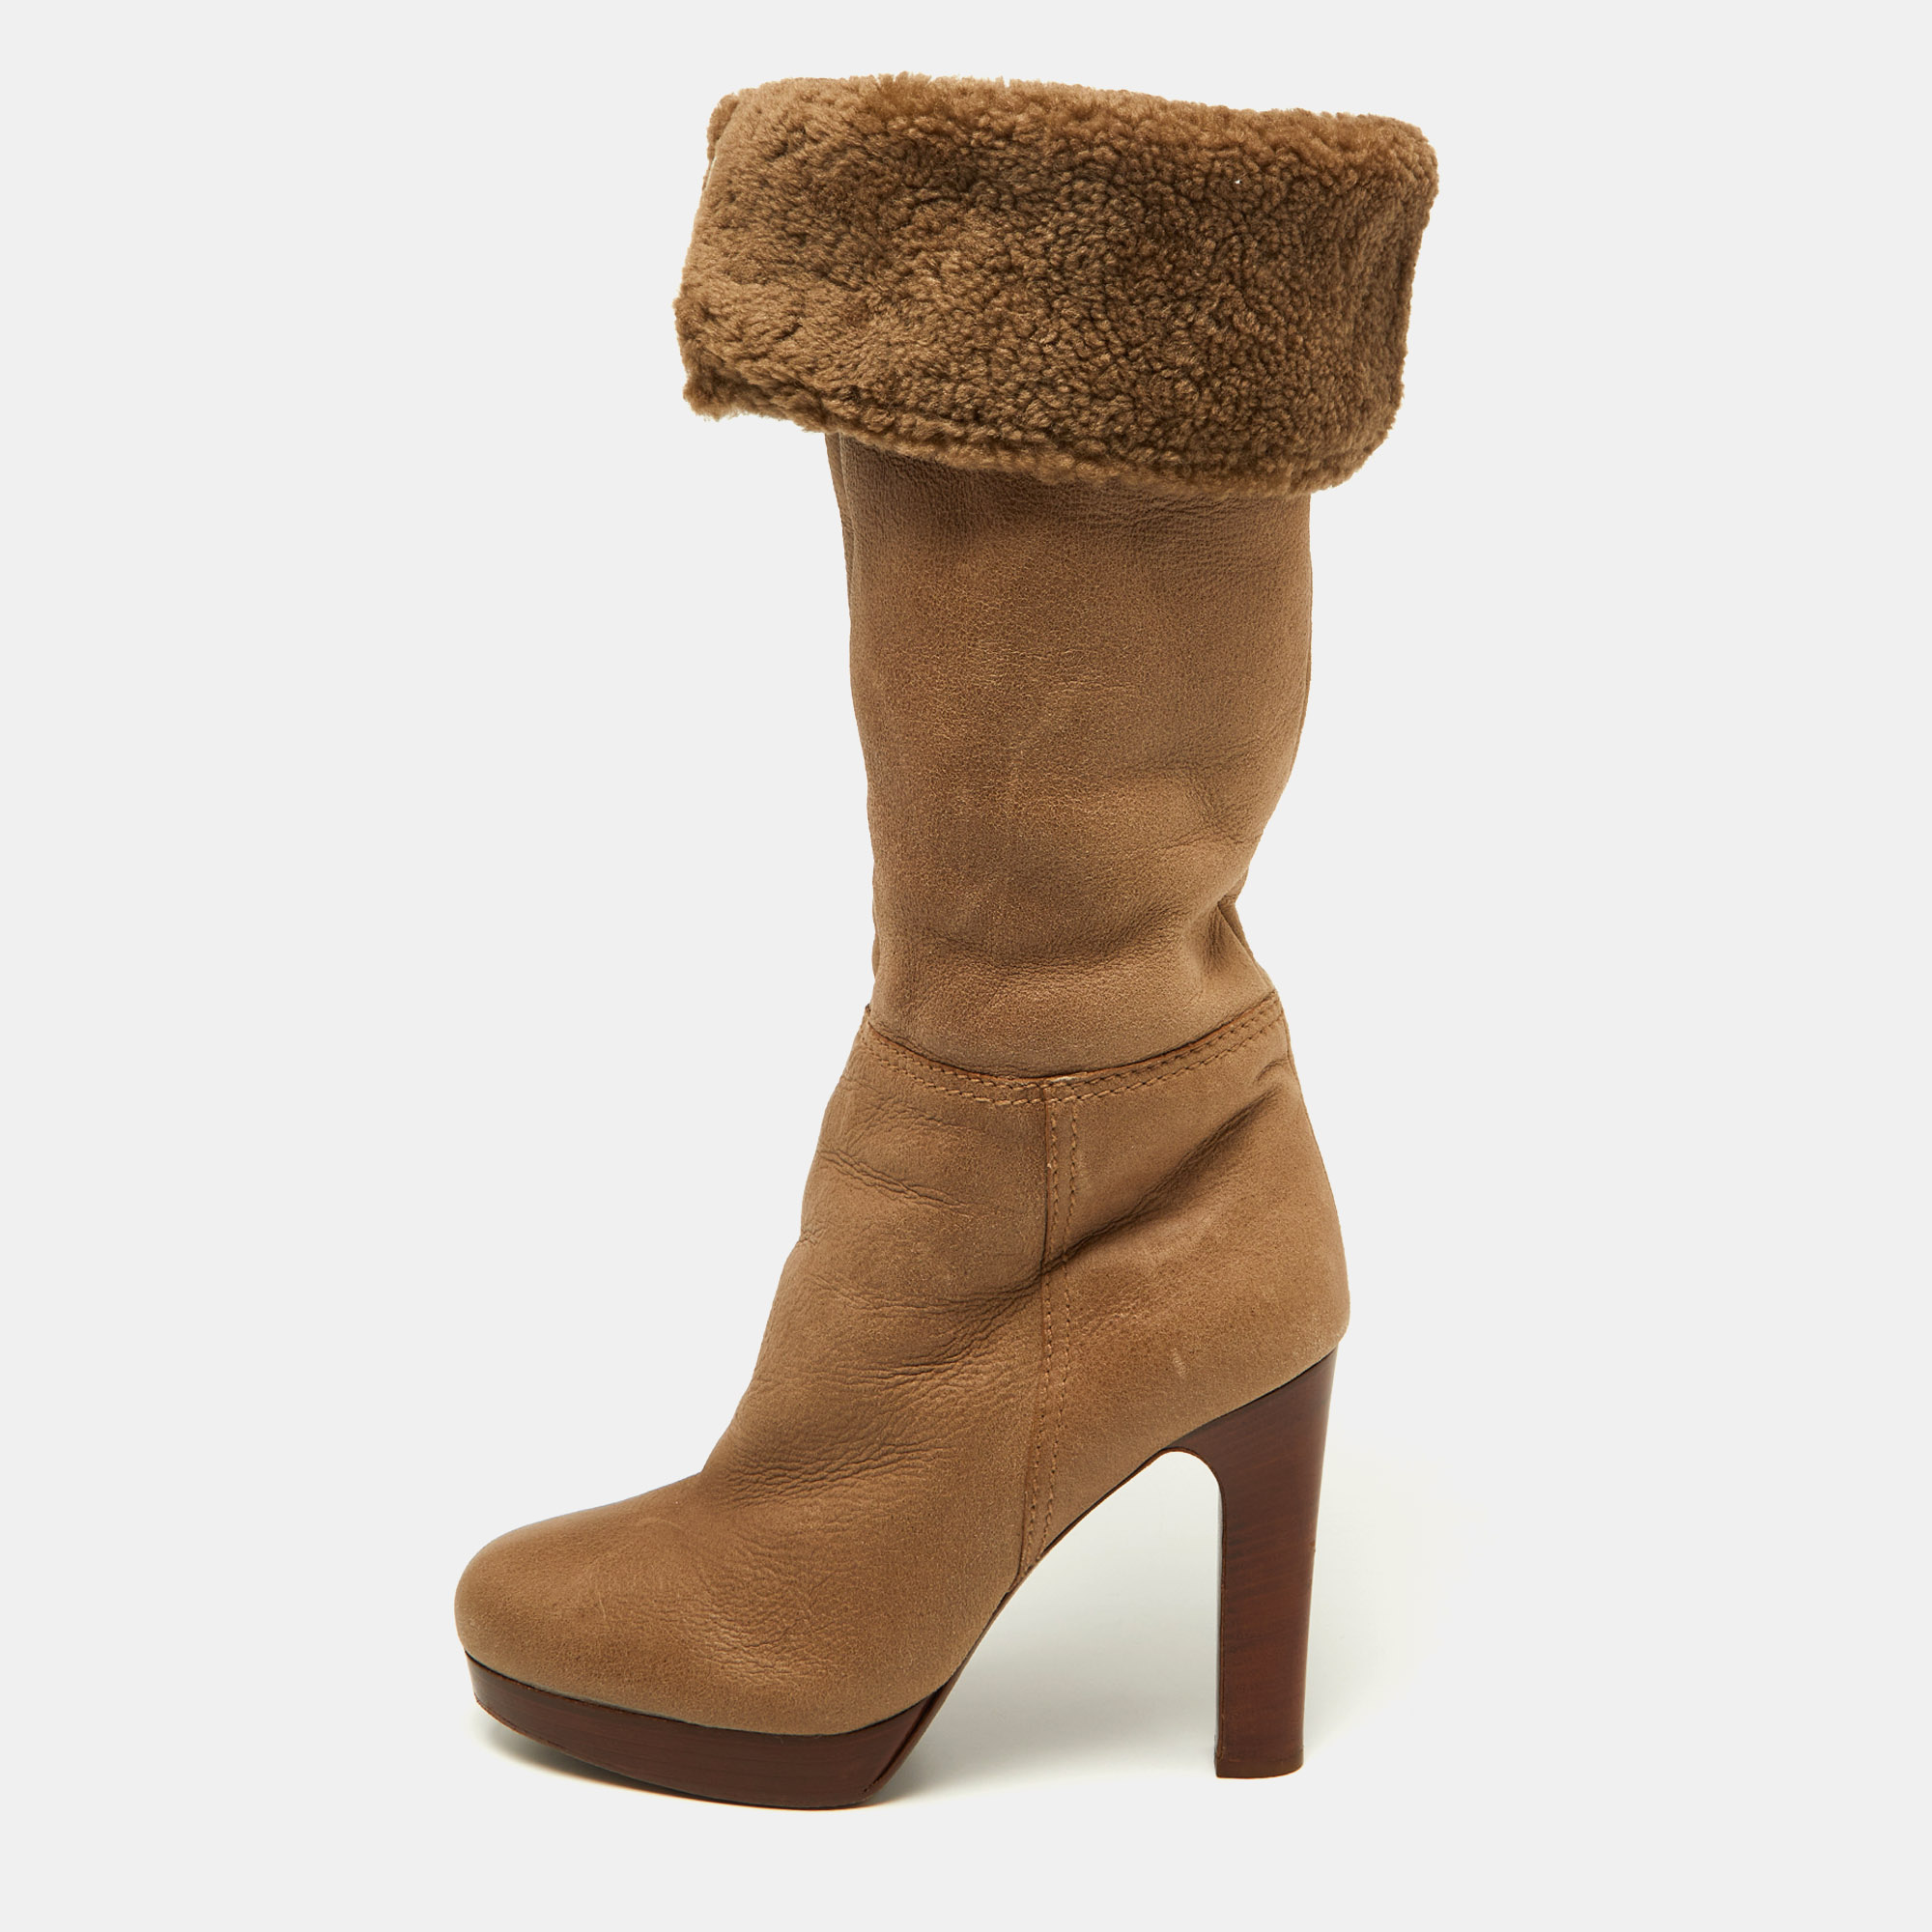 Miu miu light brown leather fur lined knee length boots size 40